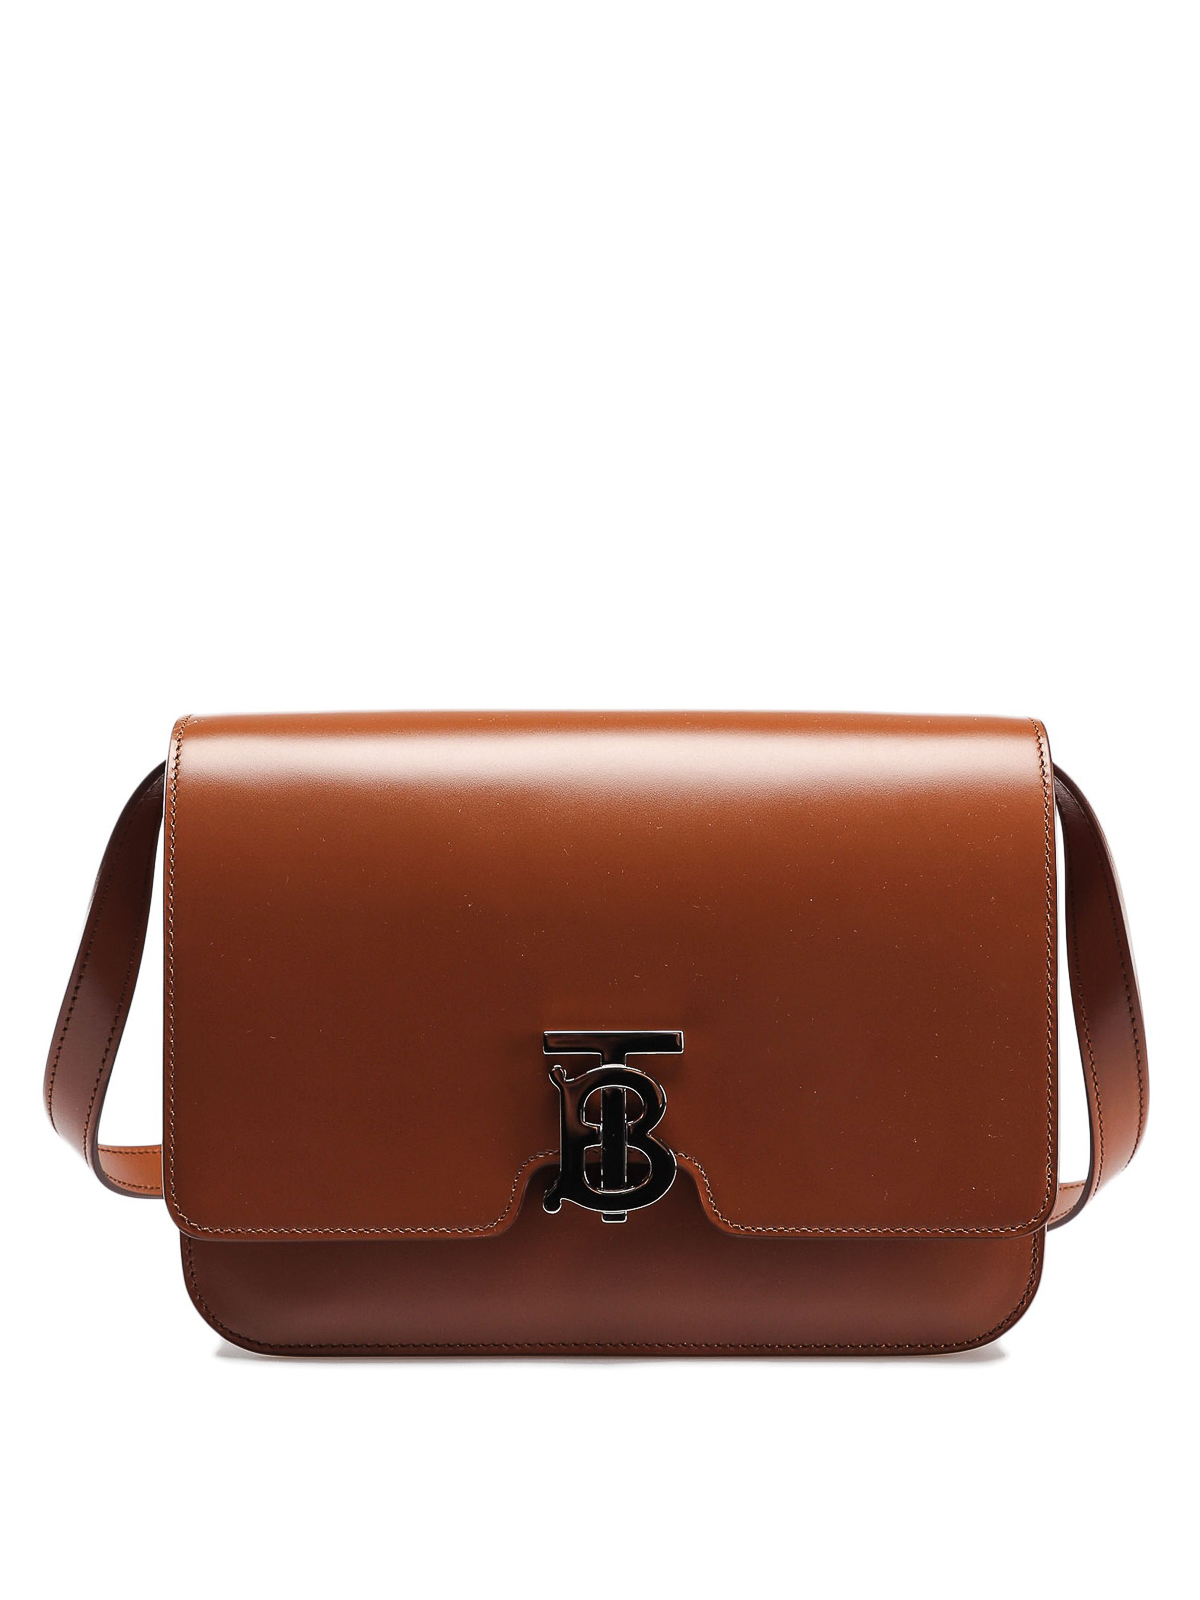 brown leather burberry bag